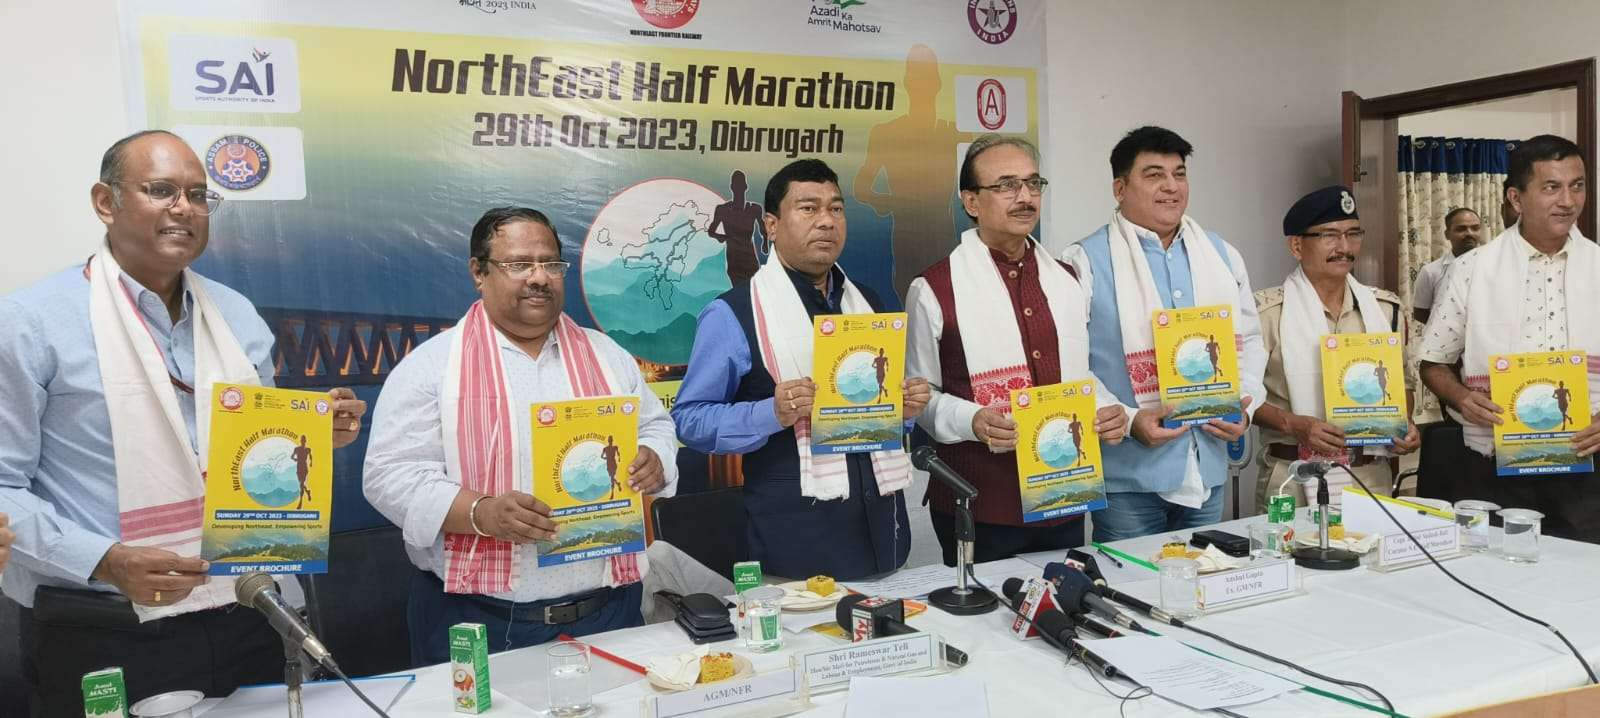 Assam: Dibrugarh to host Northeast Half Marathon to put global spotlight on Bogibeel Bridge